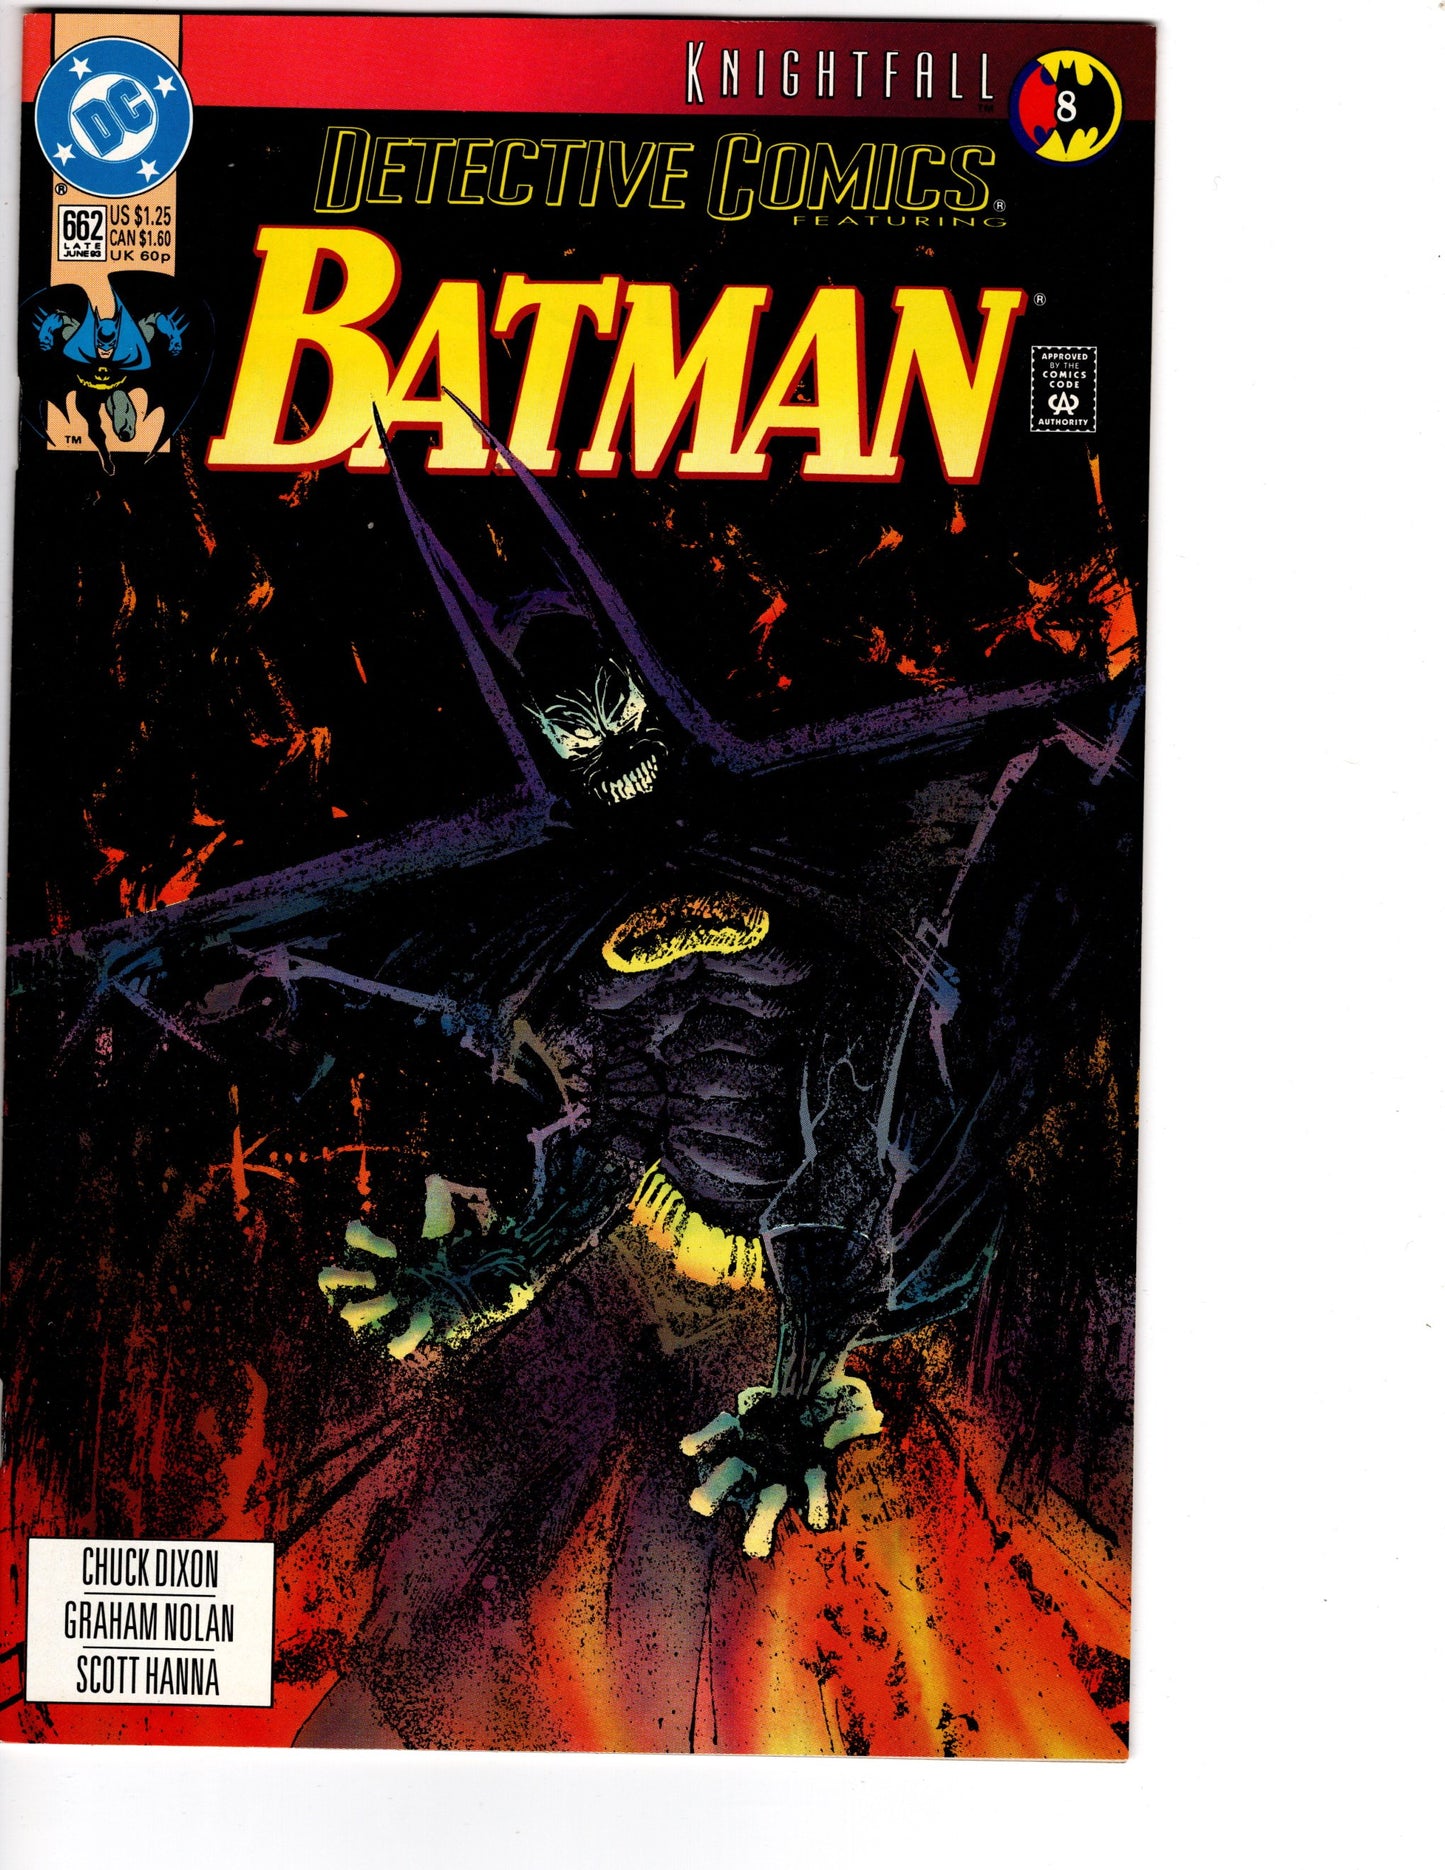 Batman #662